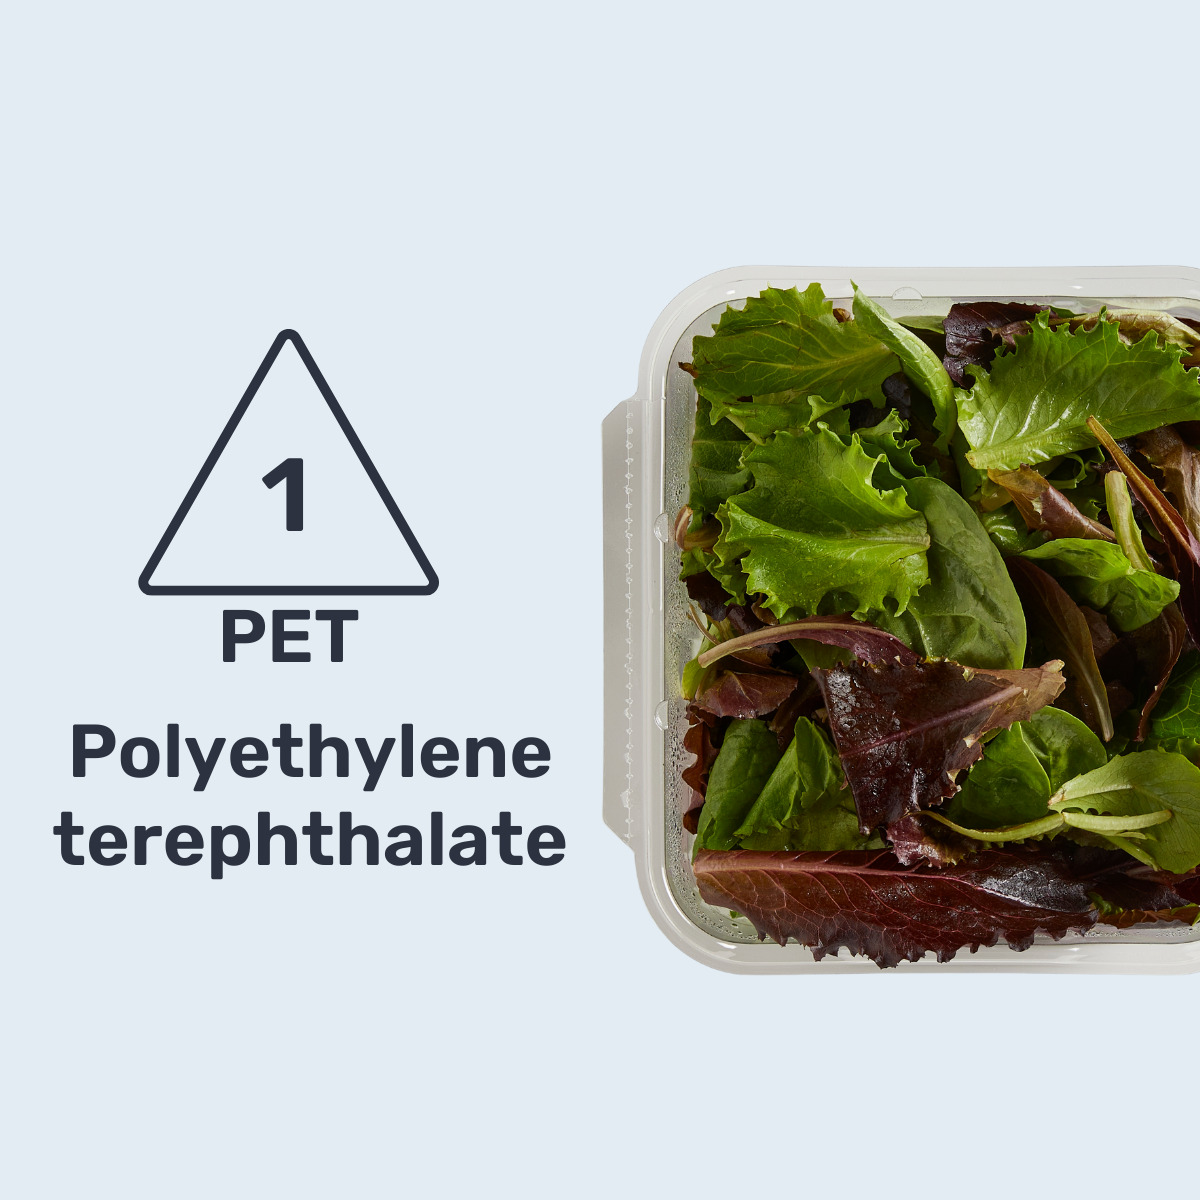 #1 PET - Packaging Polymer Series